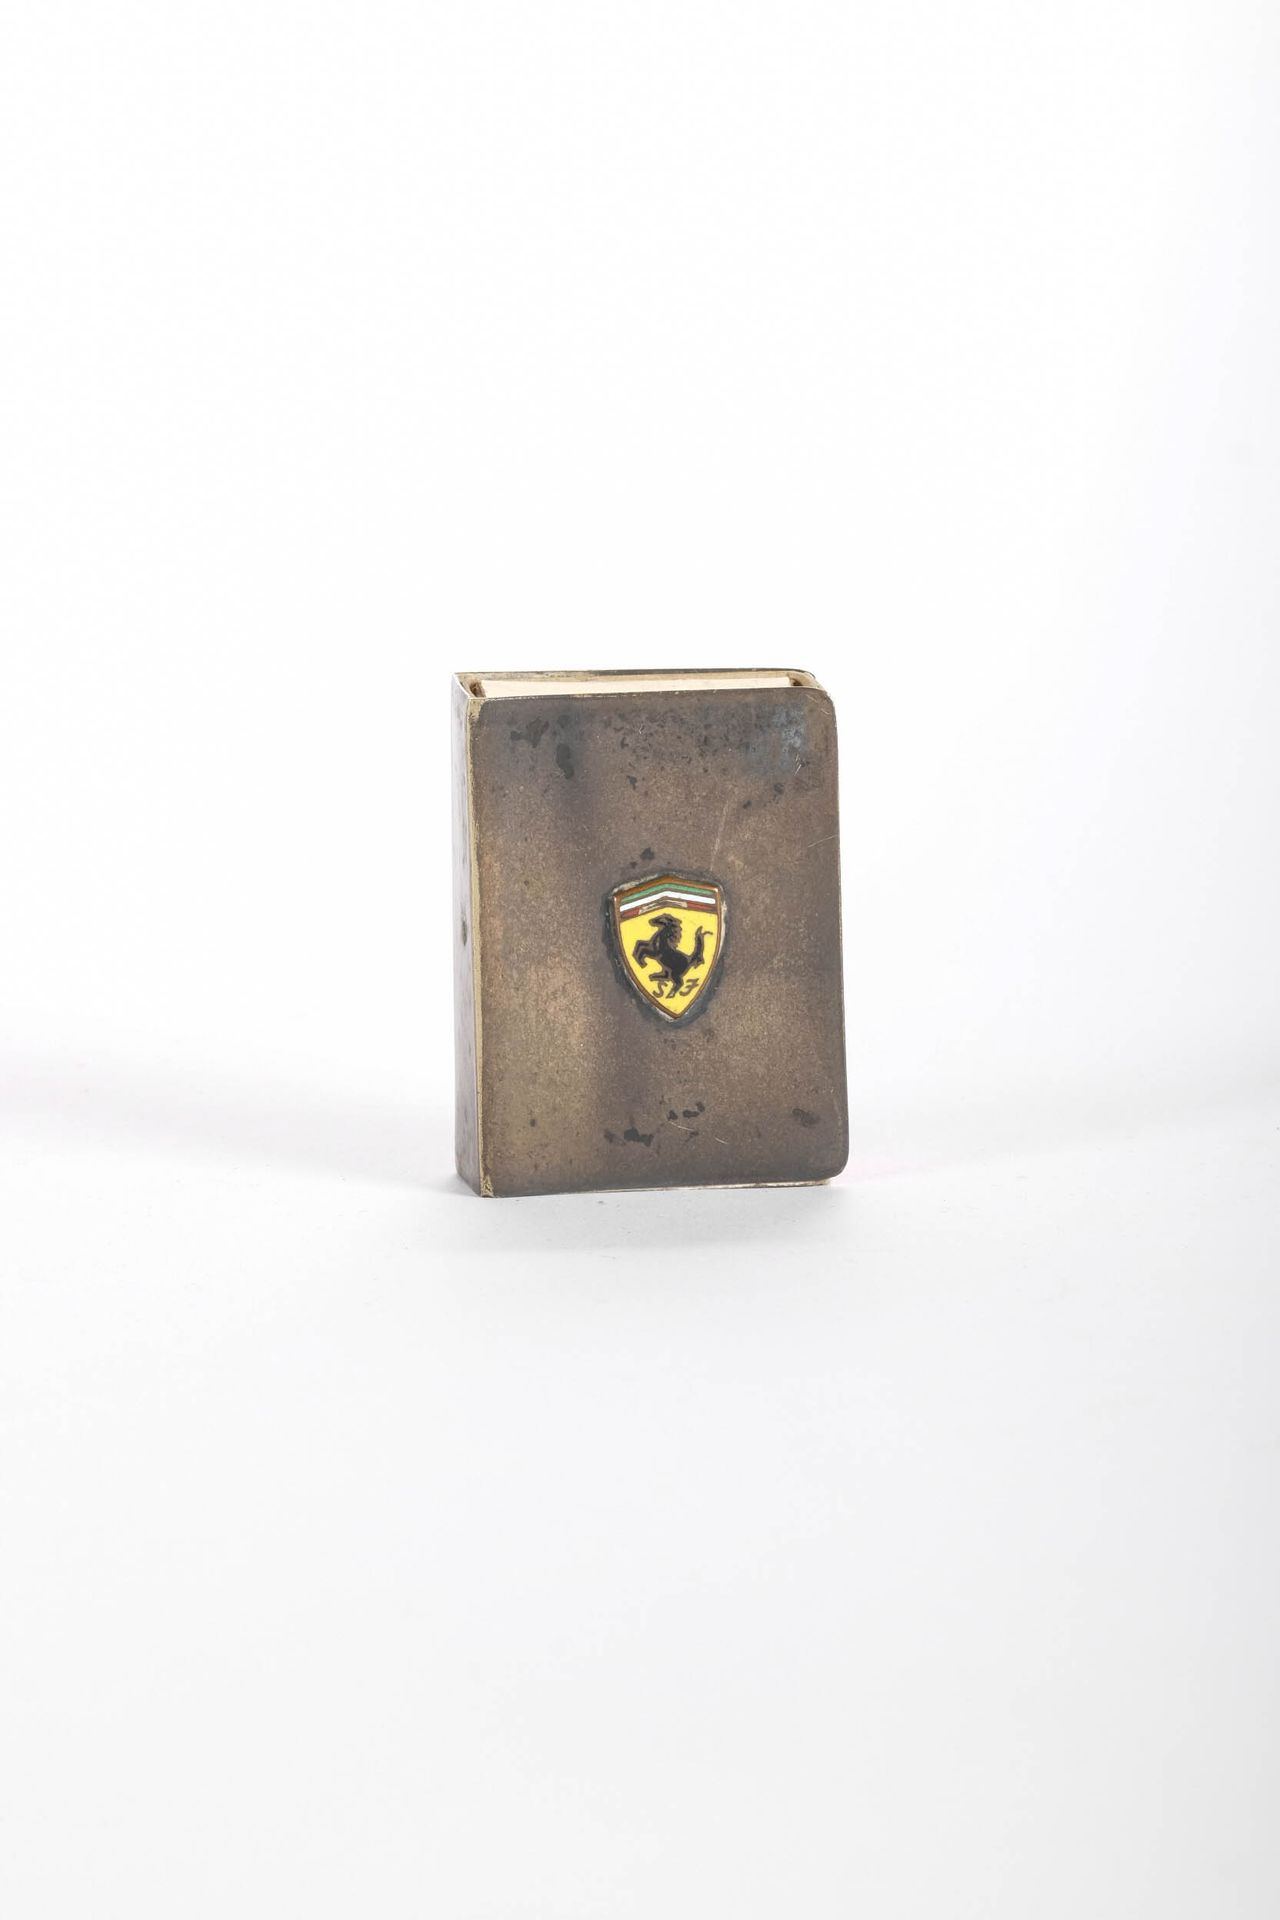 FERRARI Caja de cerillas plateada, logotipo Ferrari en esmalte cloisonné.